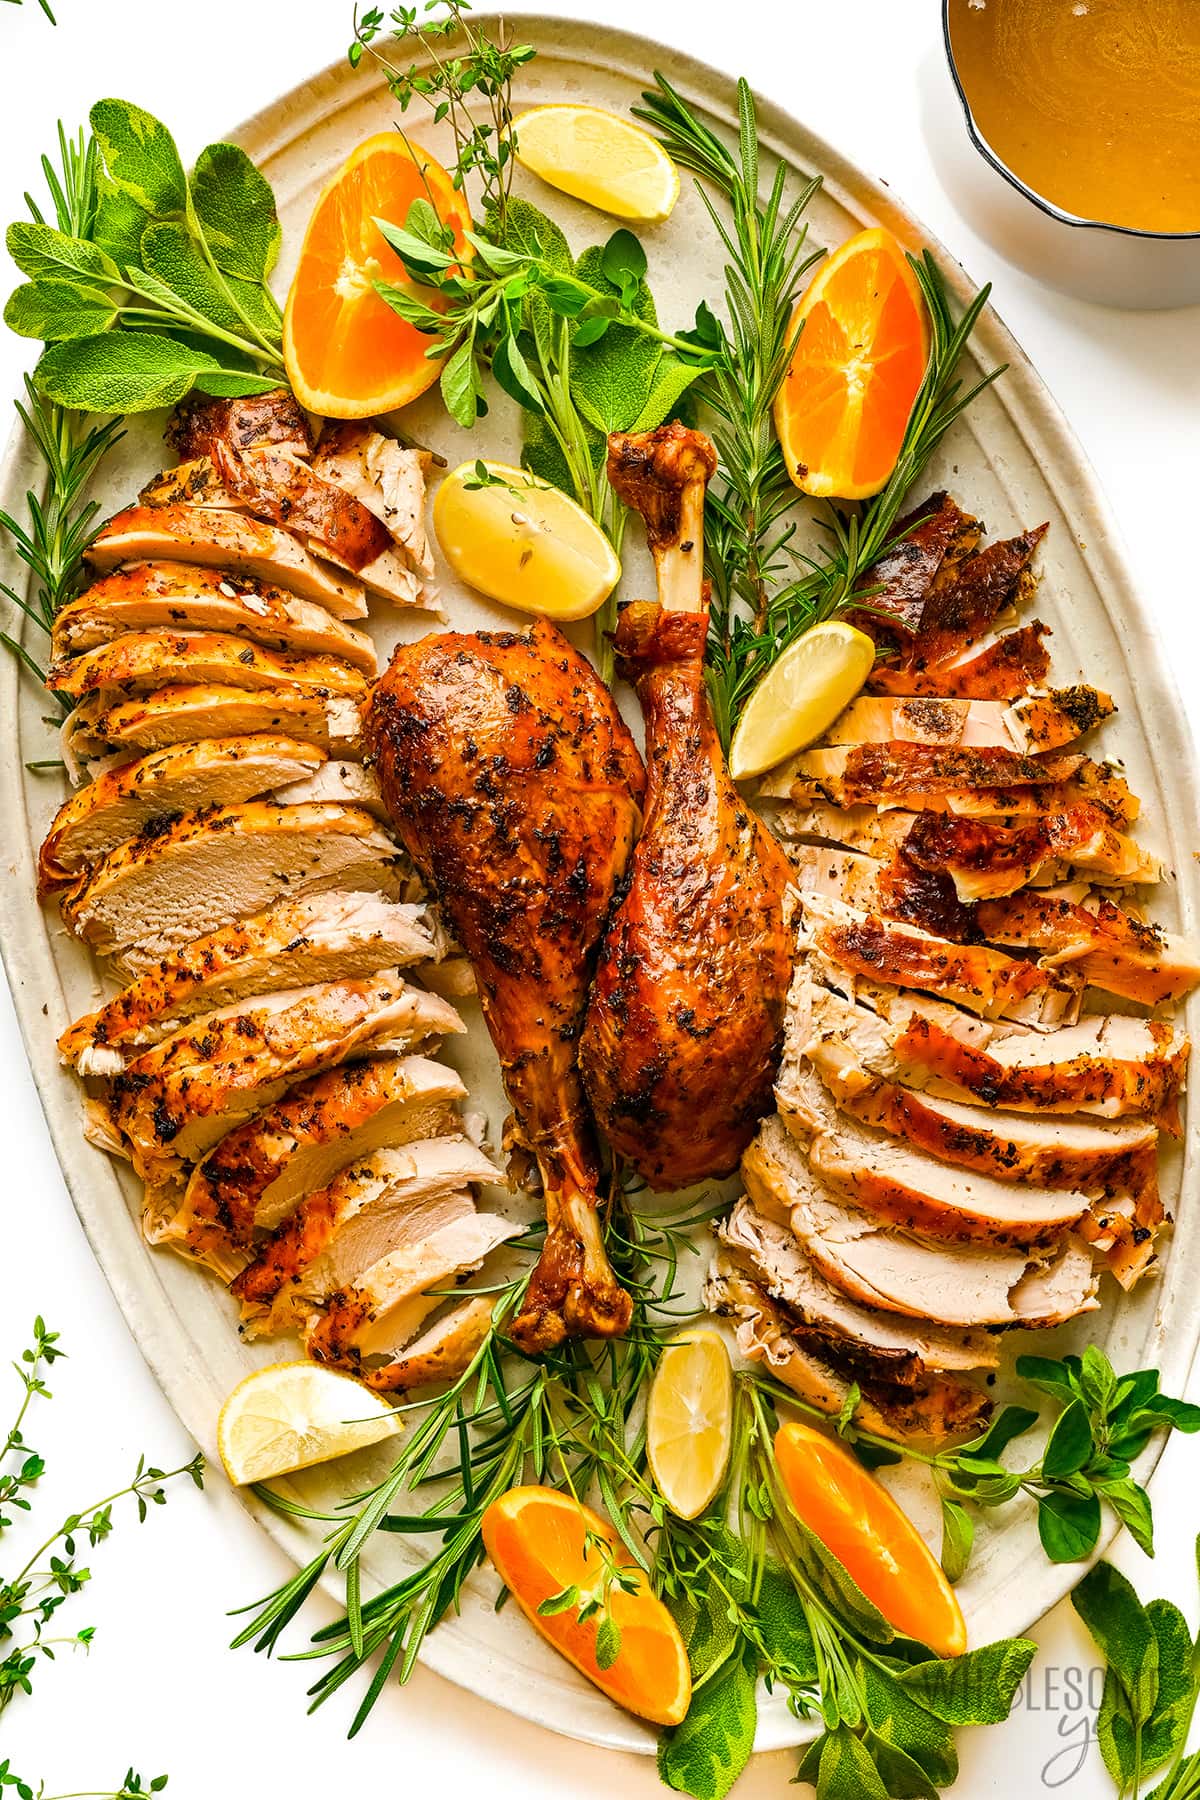 Sliced turkey next to turkey legs on a serving platter.